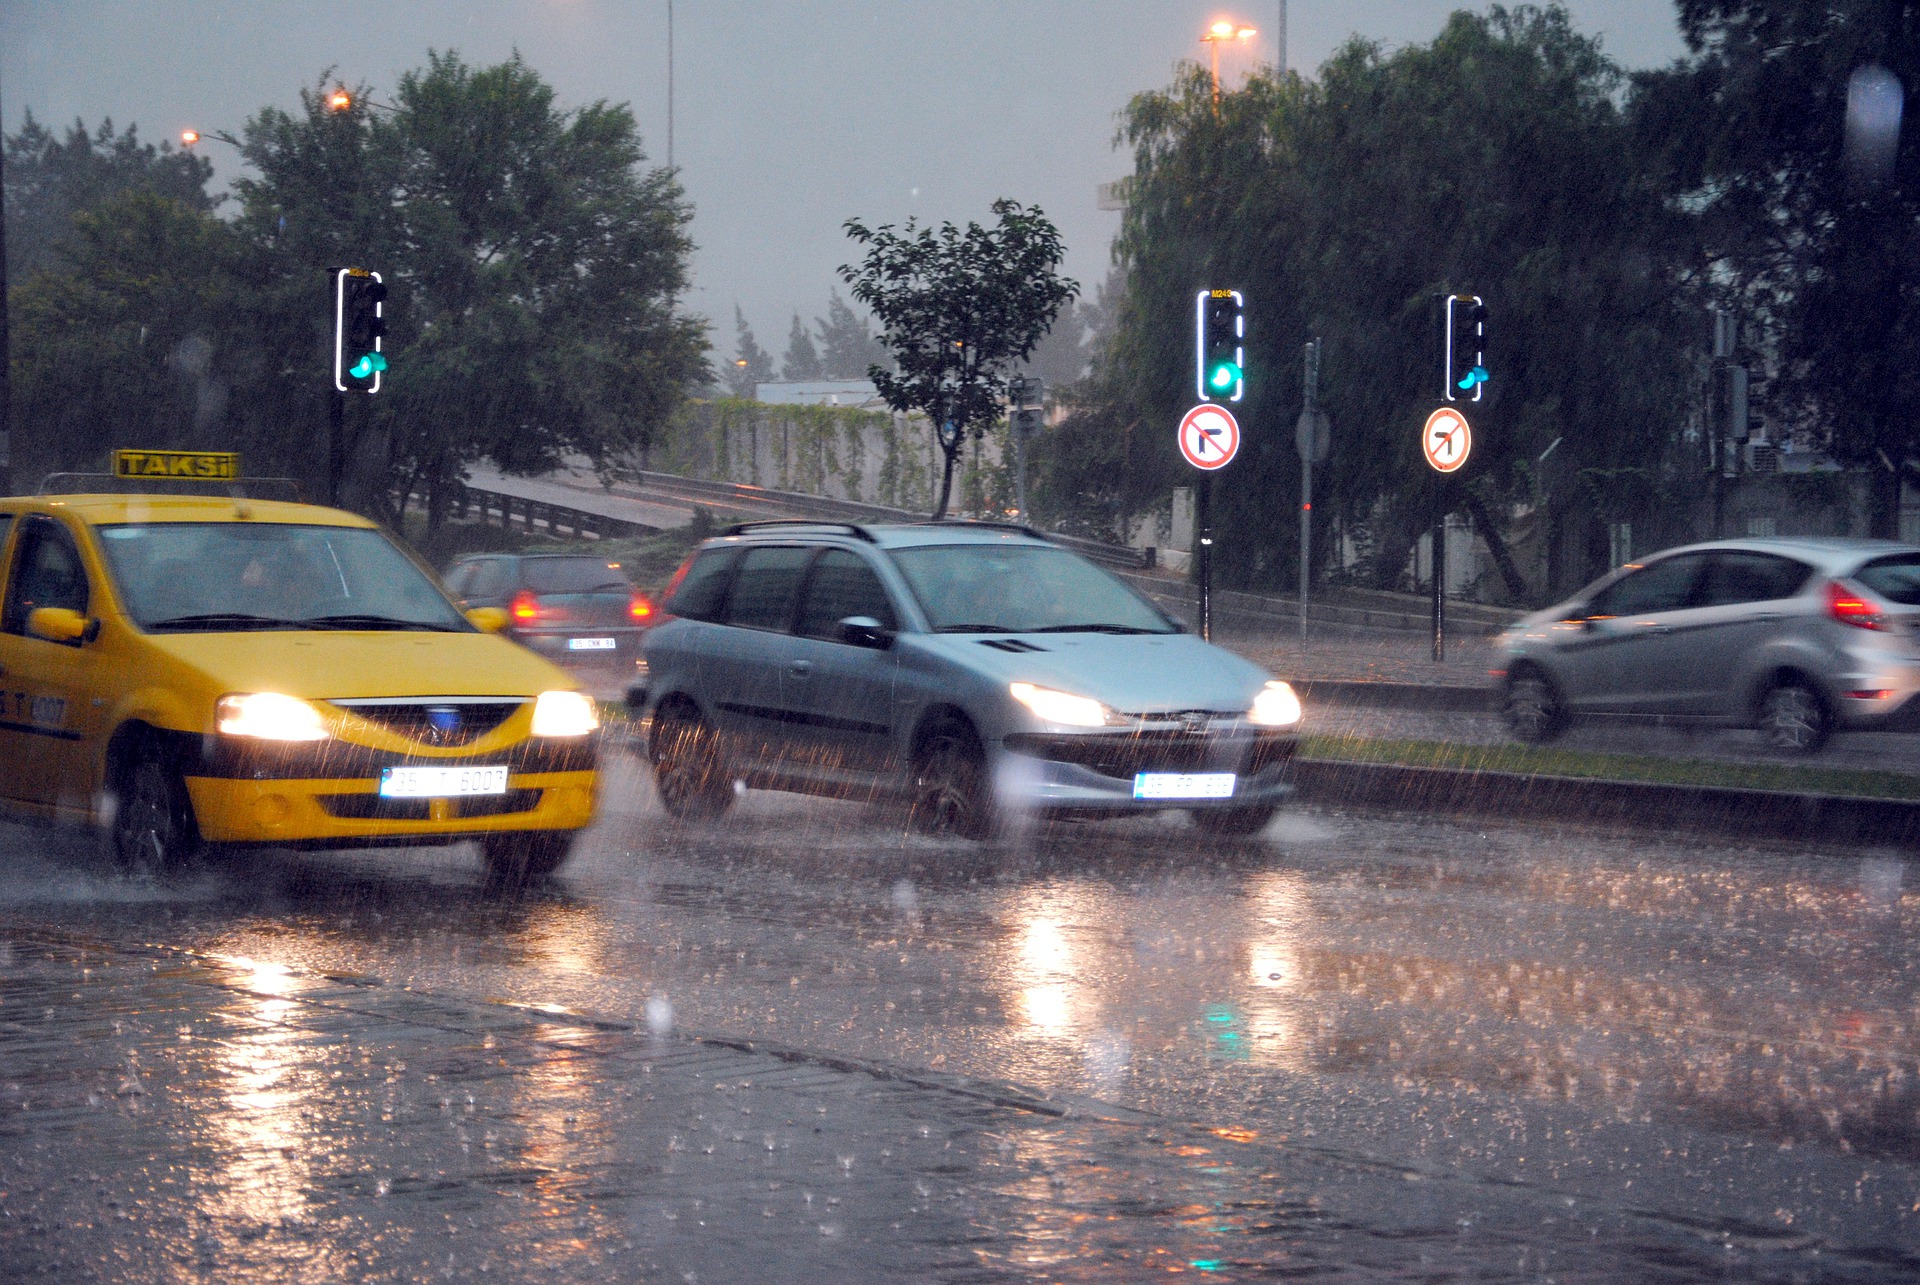 Delhi to receive rain today, IMD issues yellow alert